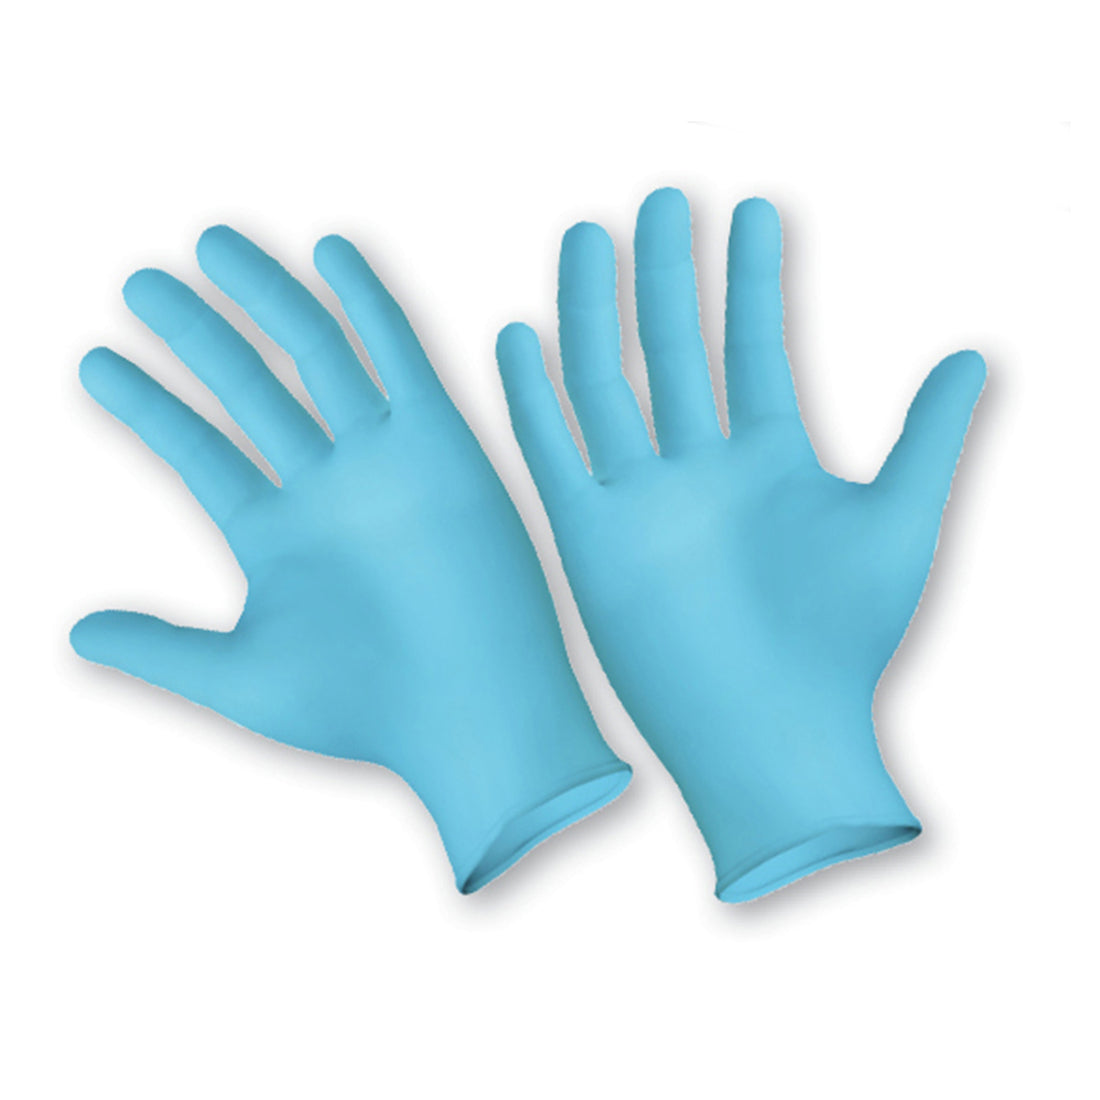 Blue Nitrile Disposable Gloves, Powder-Free Textured, 4 mil Latex-Free, Medium, Box of 100